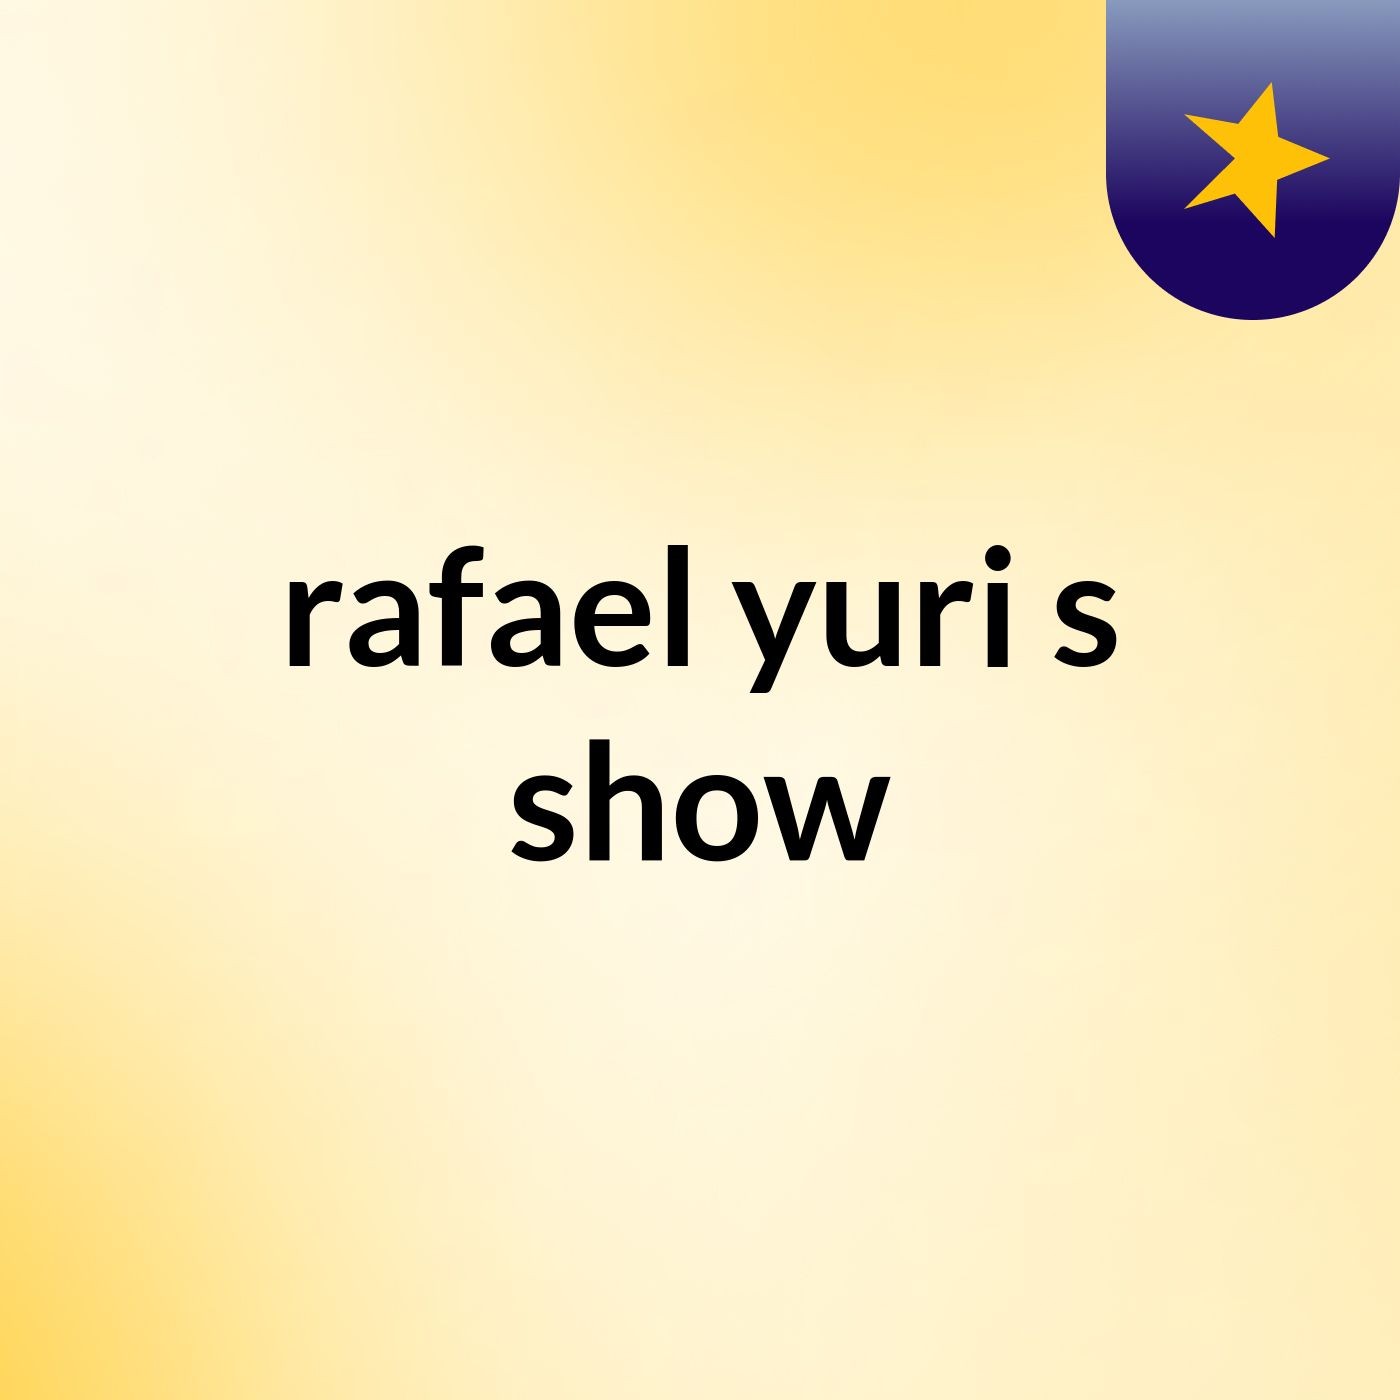 rafael yuri's show